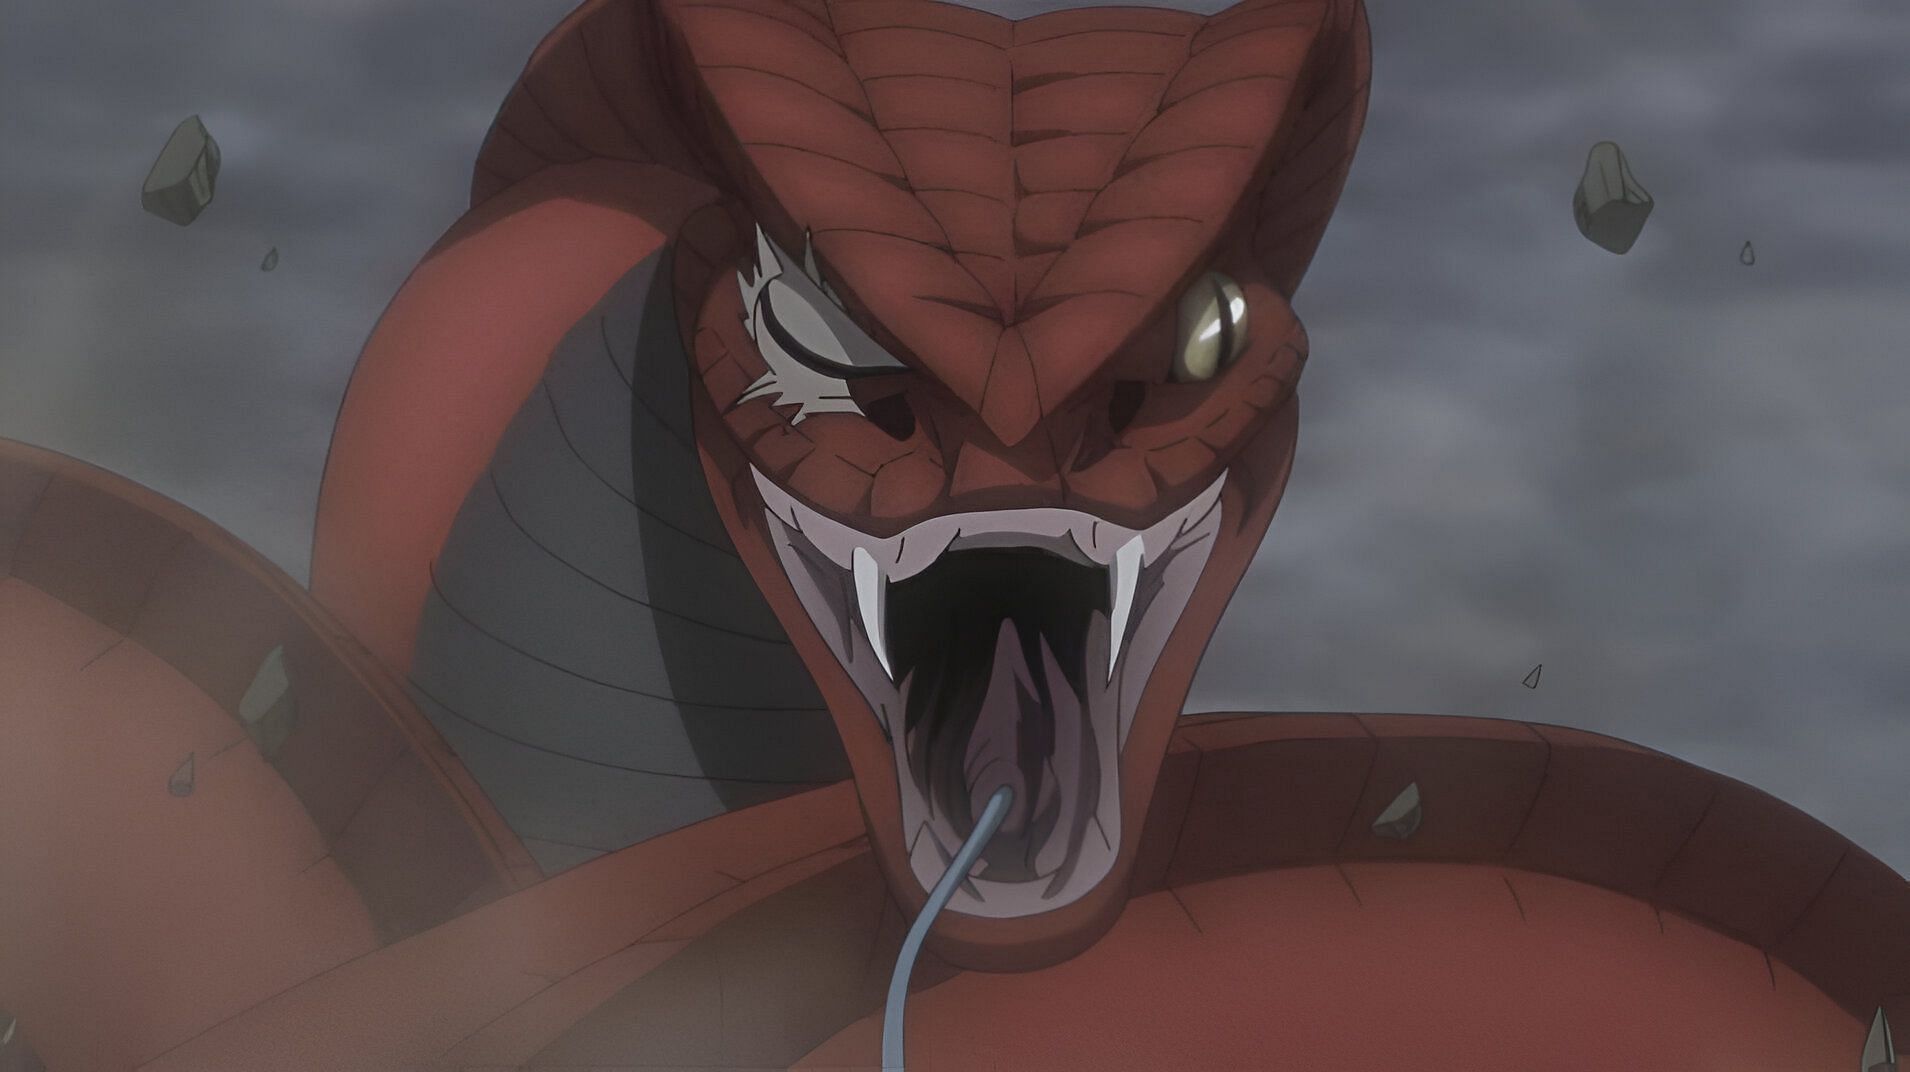 Garaga as seen in the anime series (Image via Studio Pierrot)